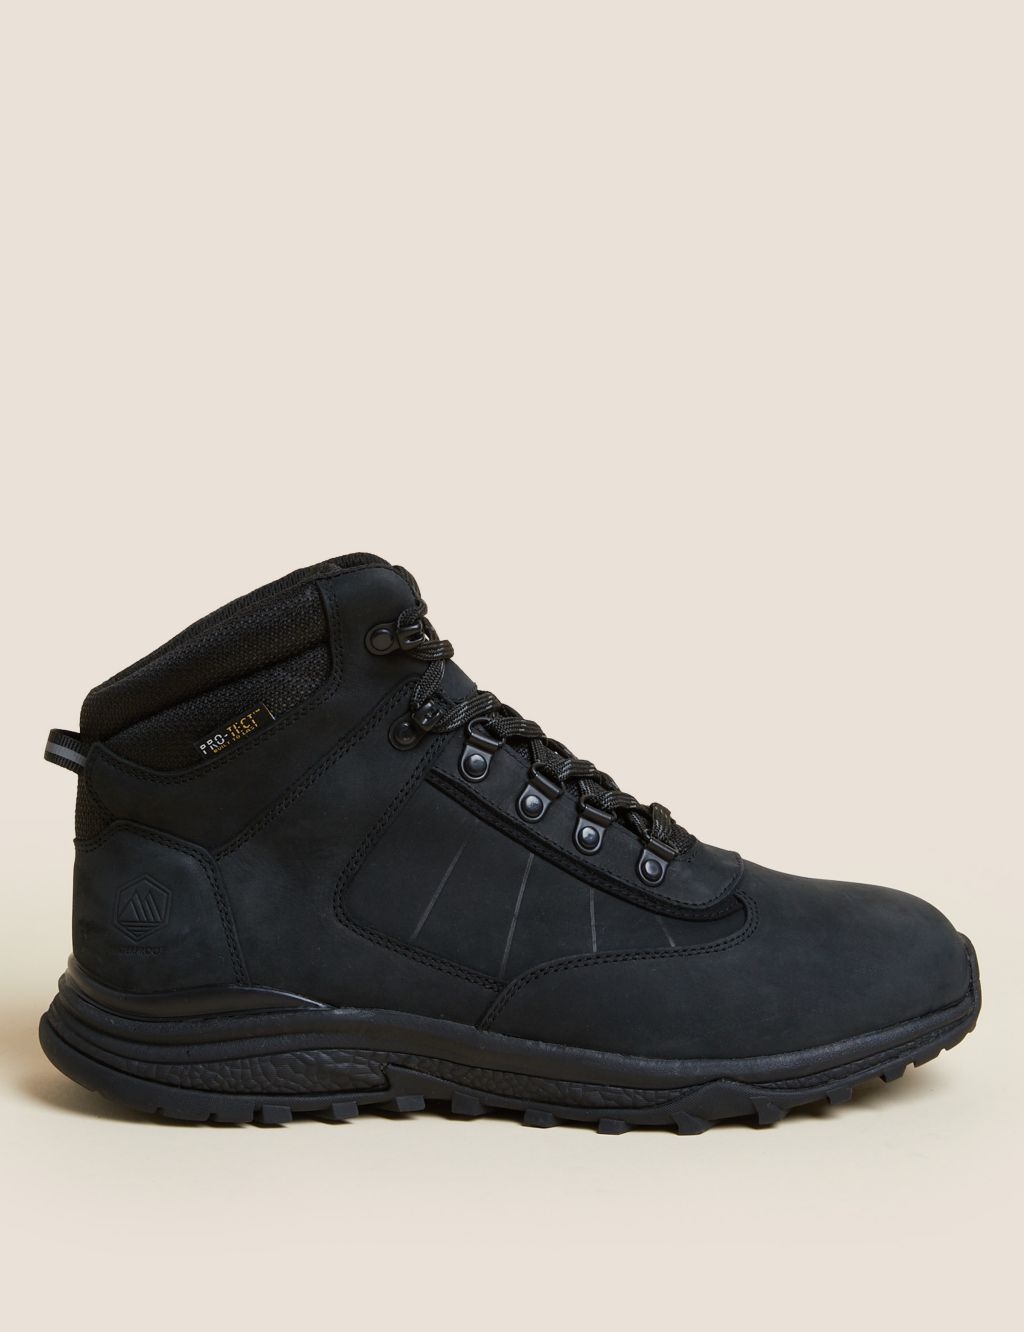 Leather Waterproof Walking Boots image 1